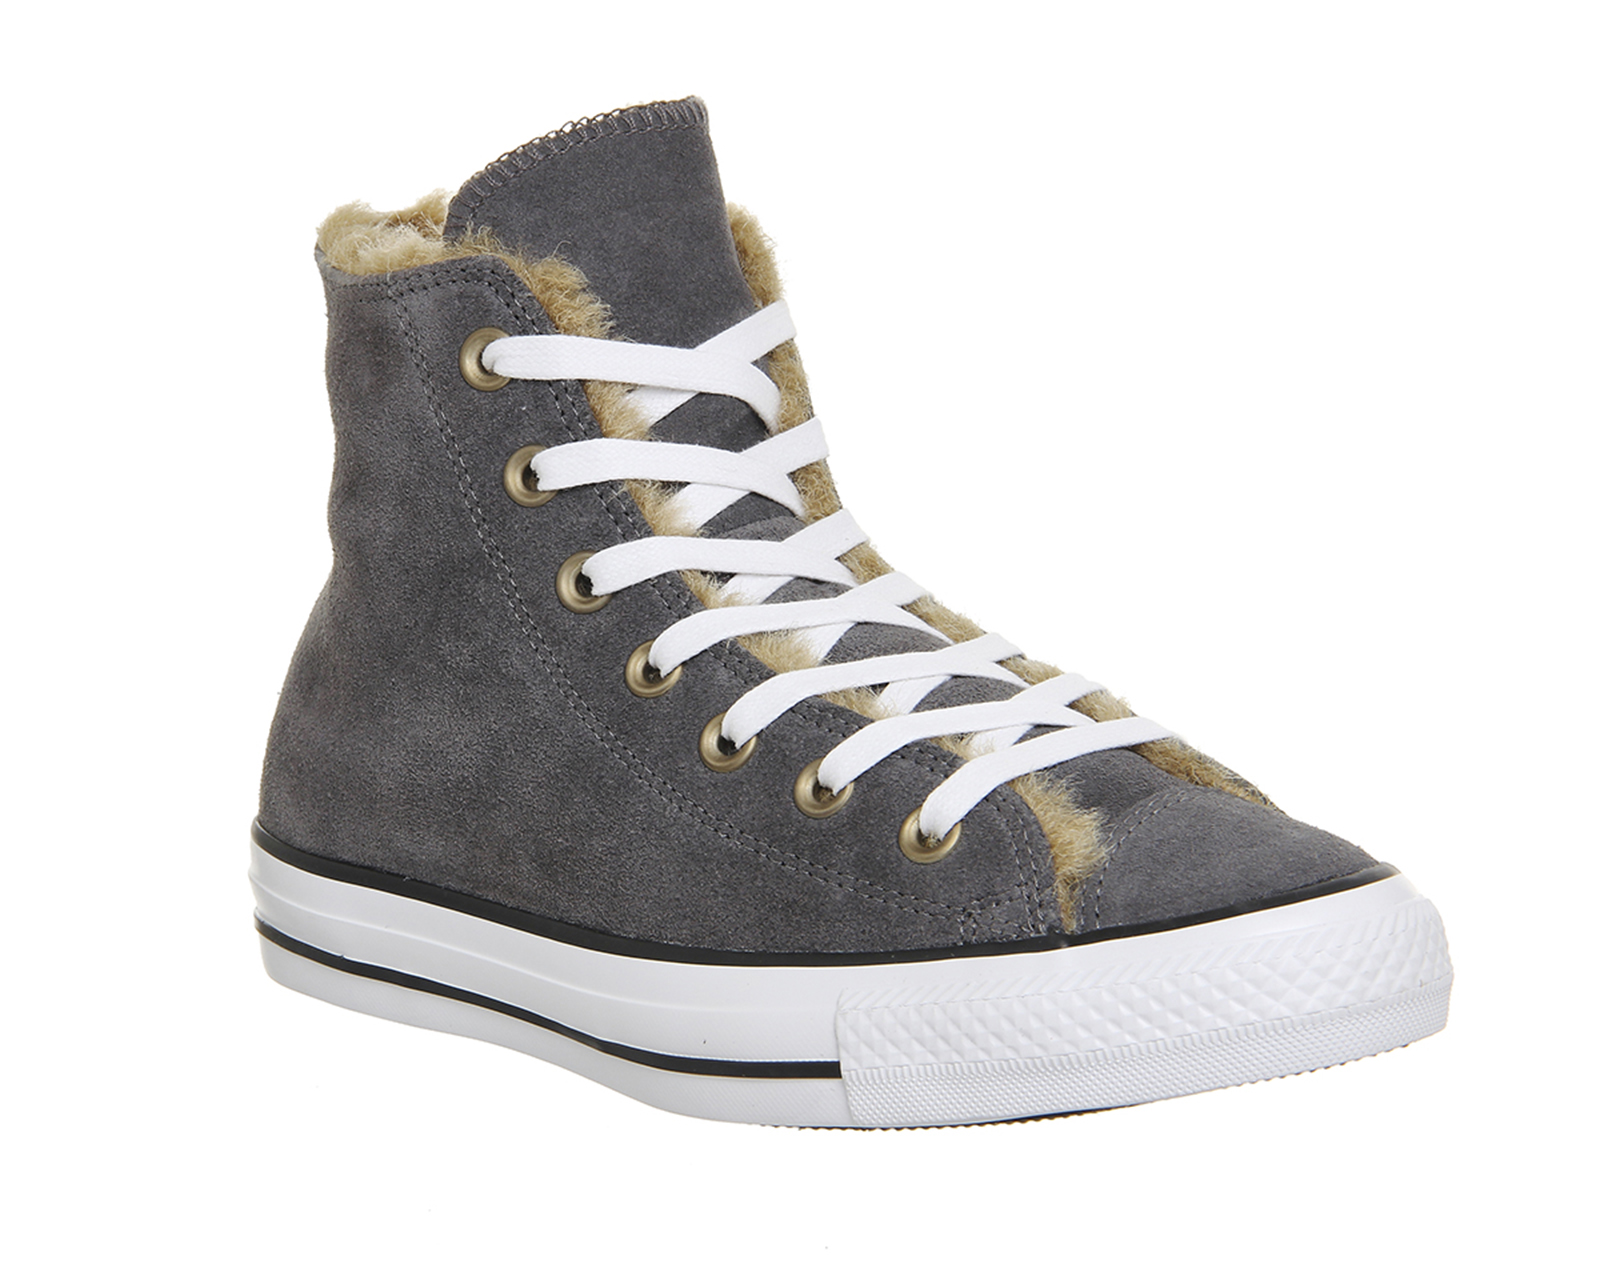 converse shoes fur lined Online 